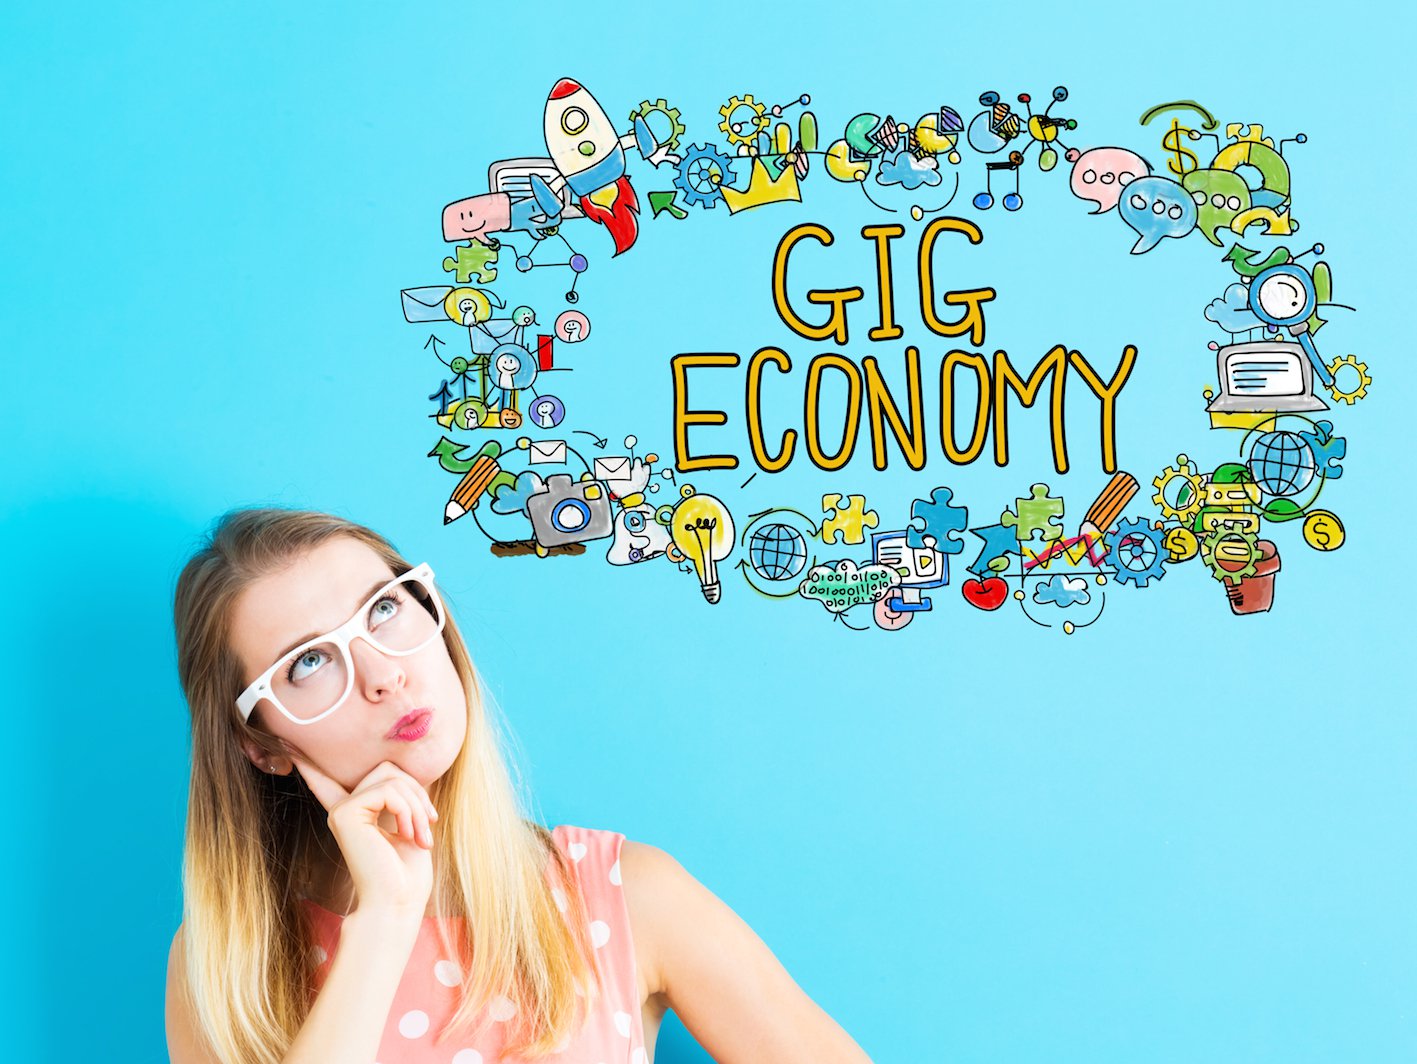 De Gig Economy en de nieuwe freelancer